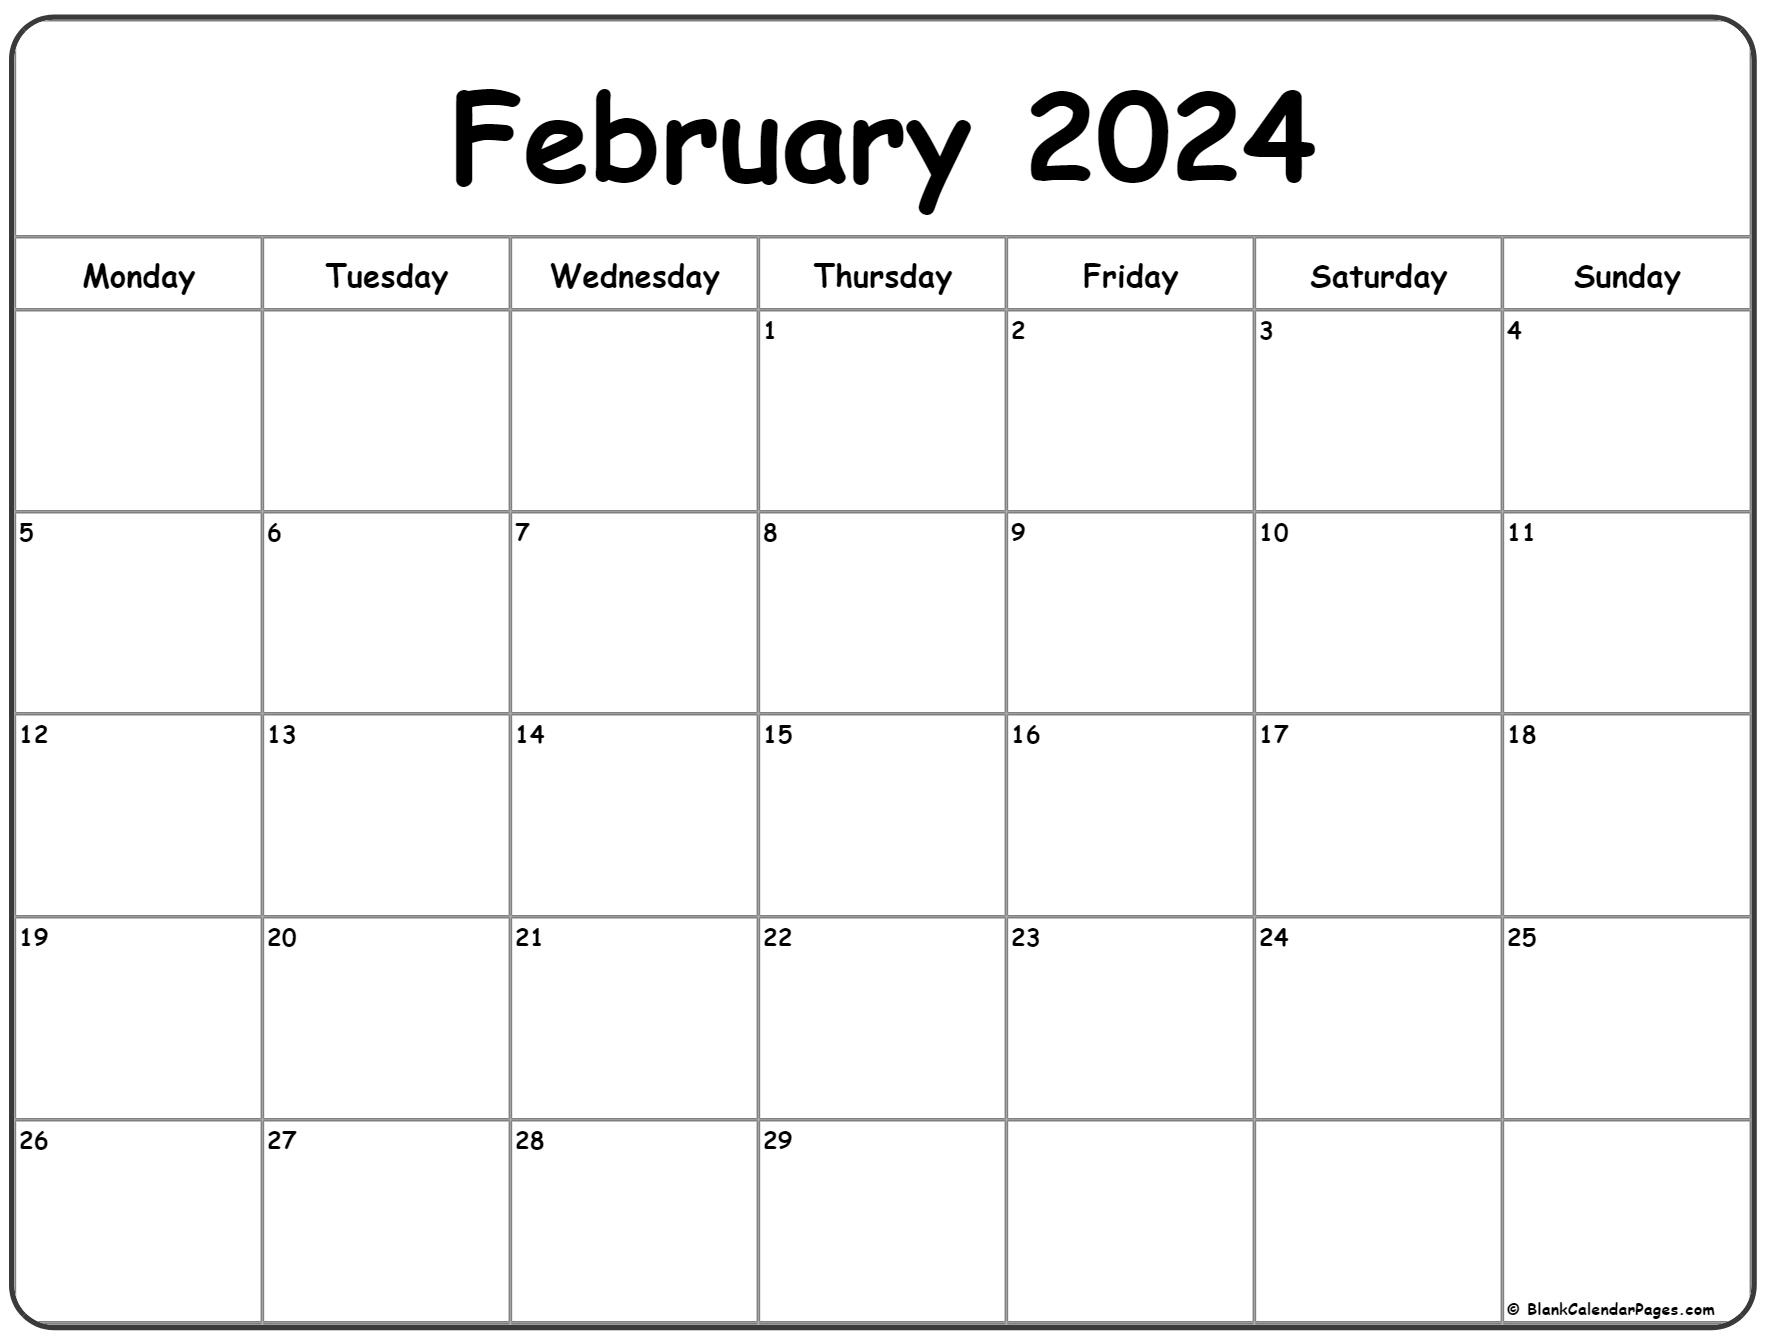 February 2024 Calendar Printable Monday Start February 2024 Calendar - Free Printable A4 Calendar February 2024